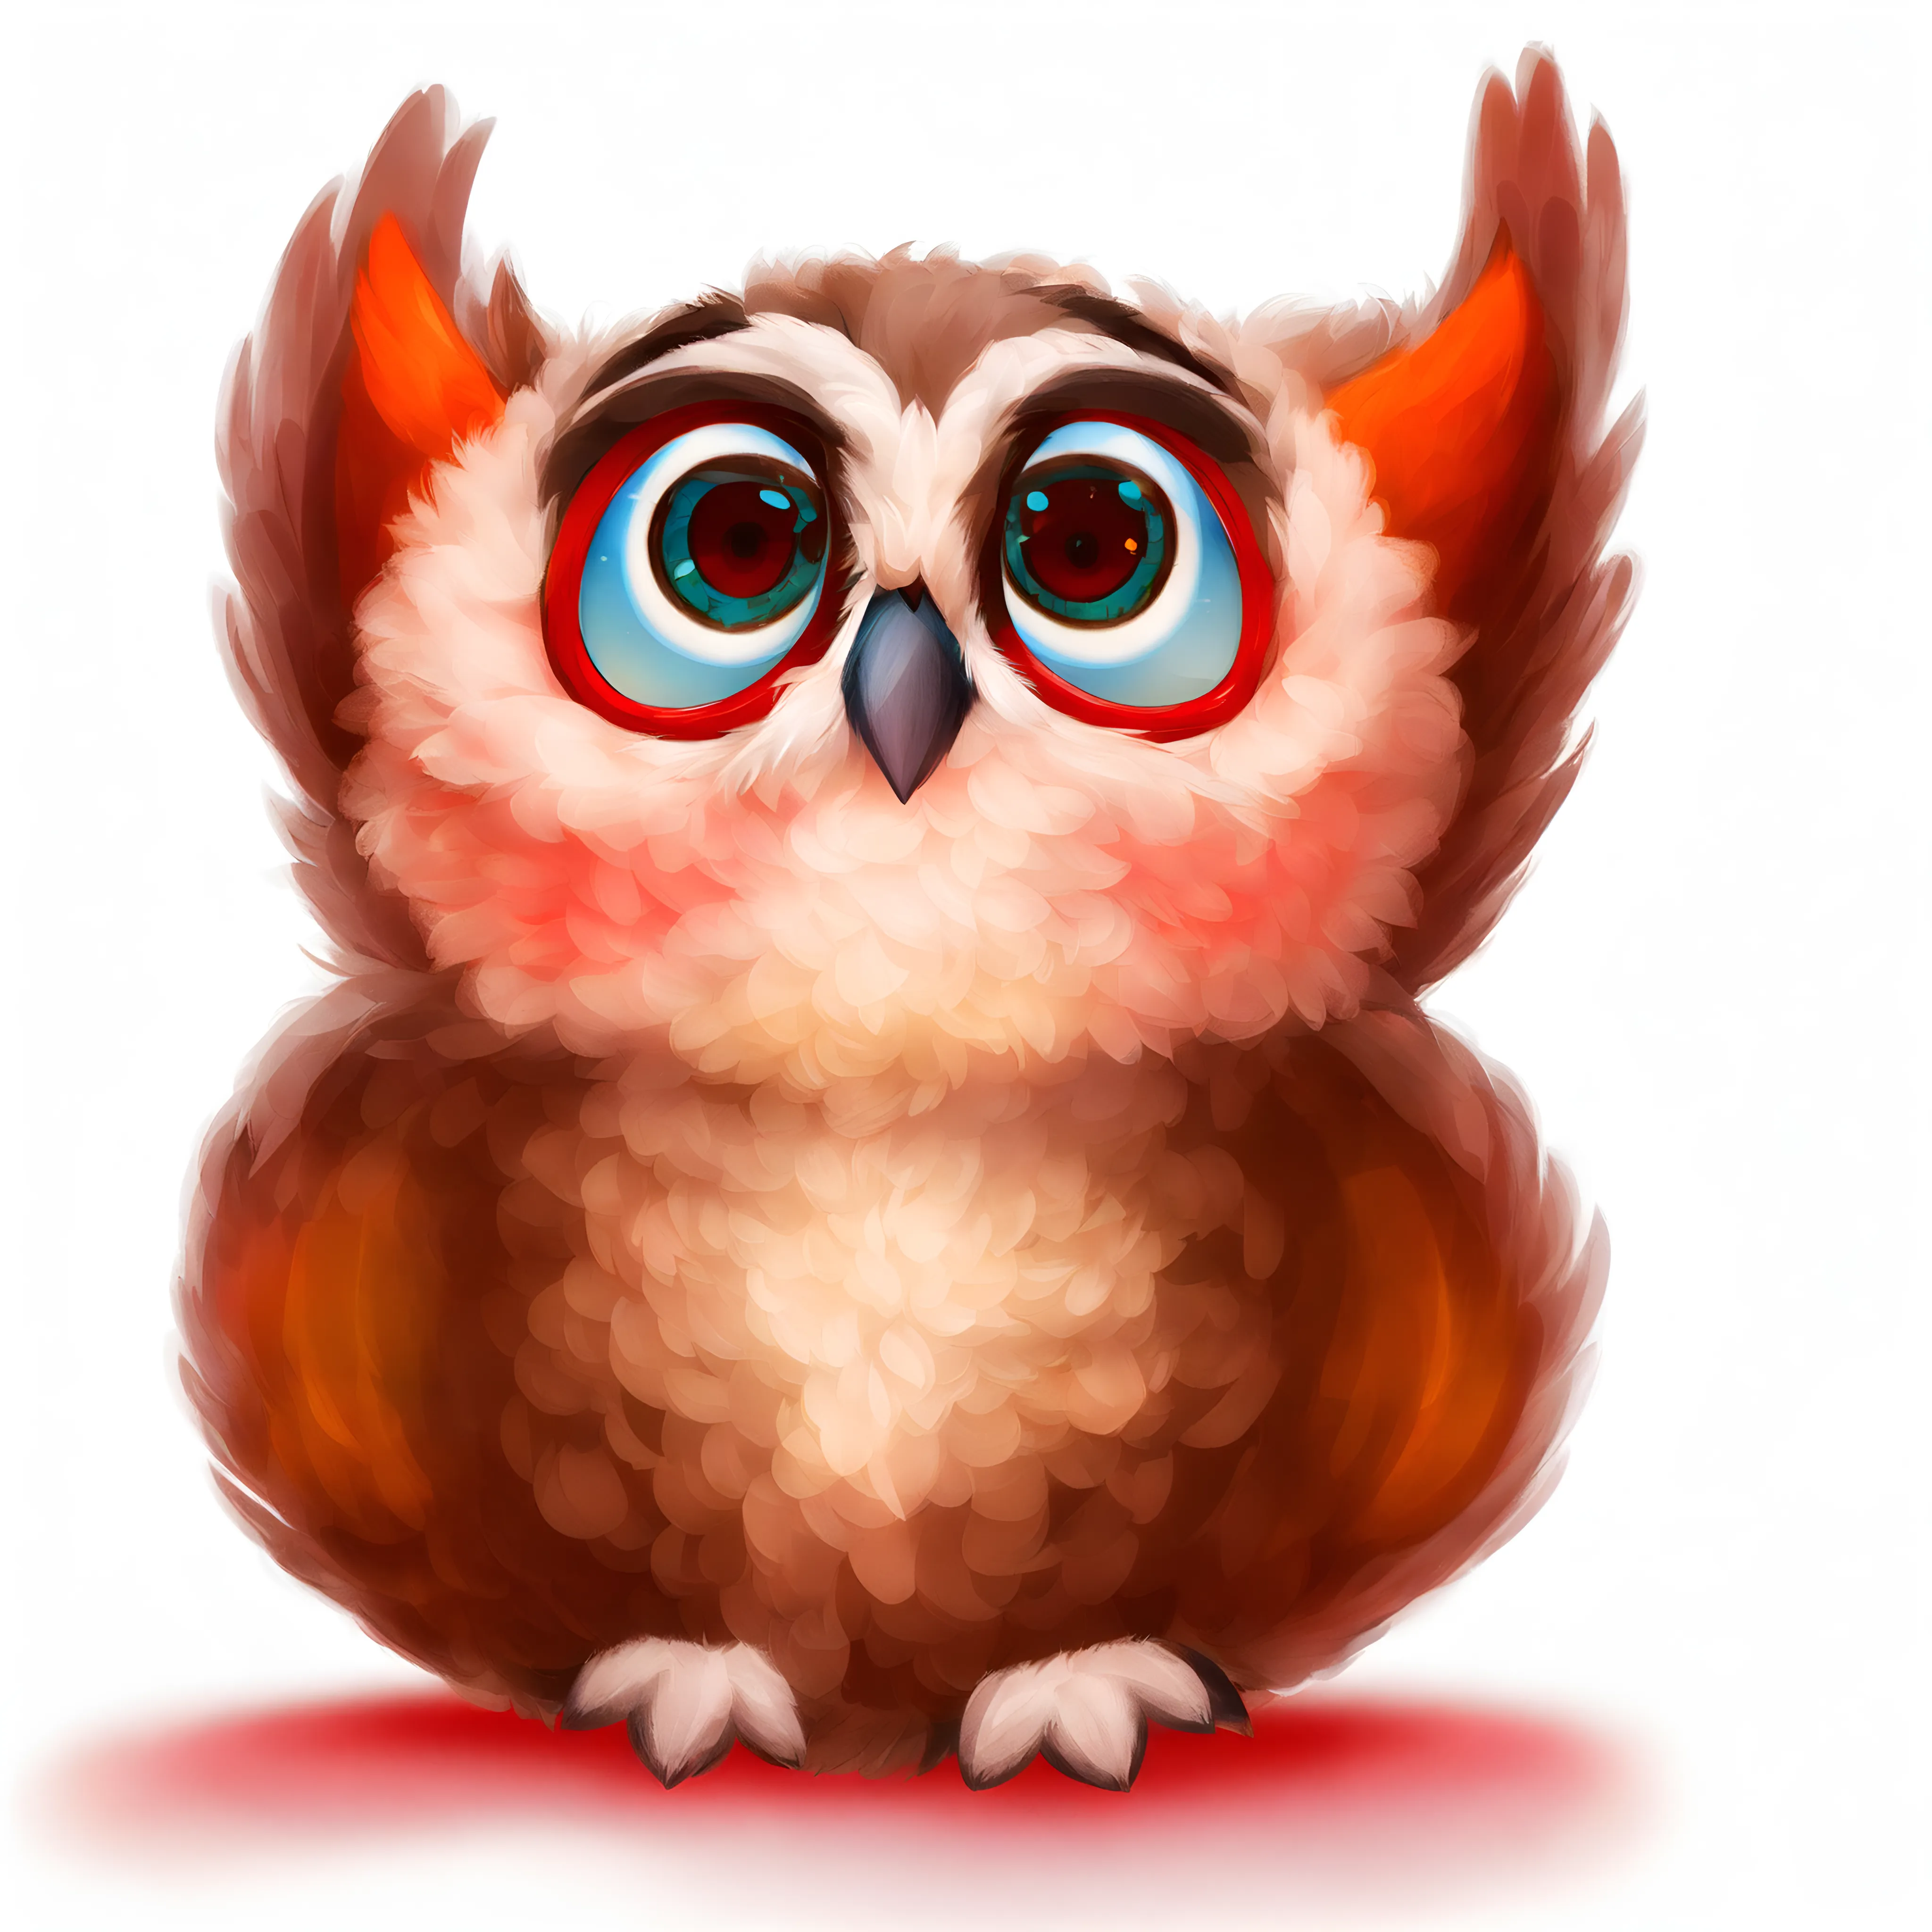 A cute fluffy baby owl cartoon Pixar studio style